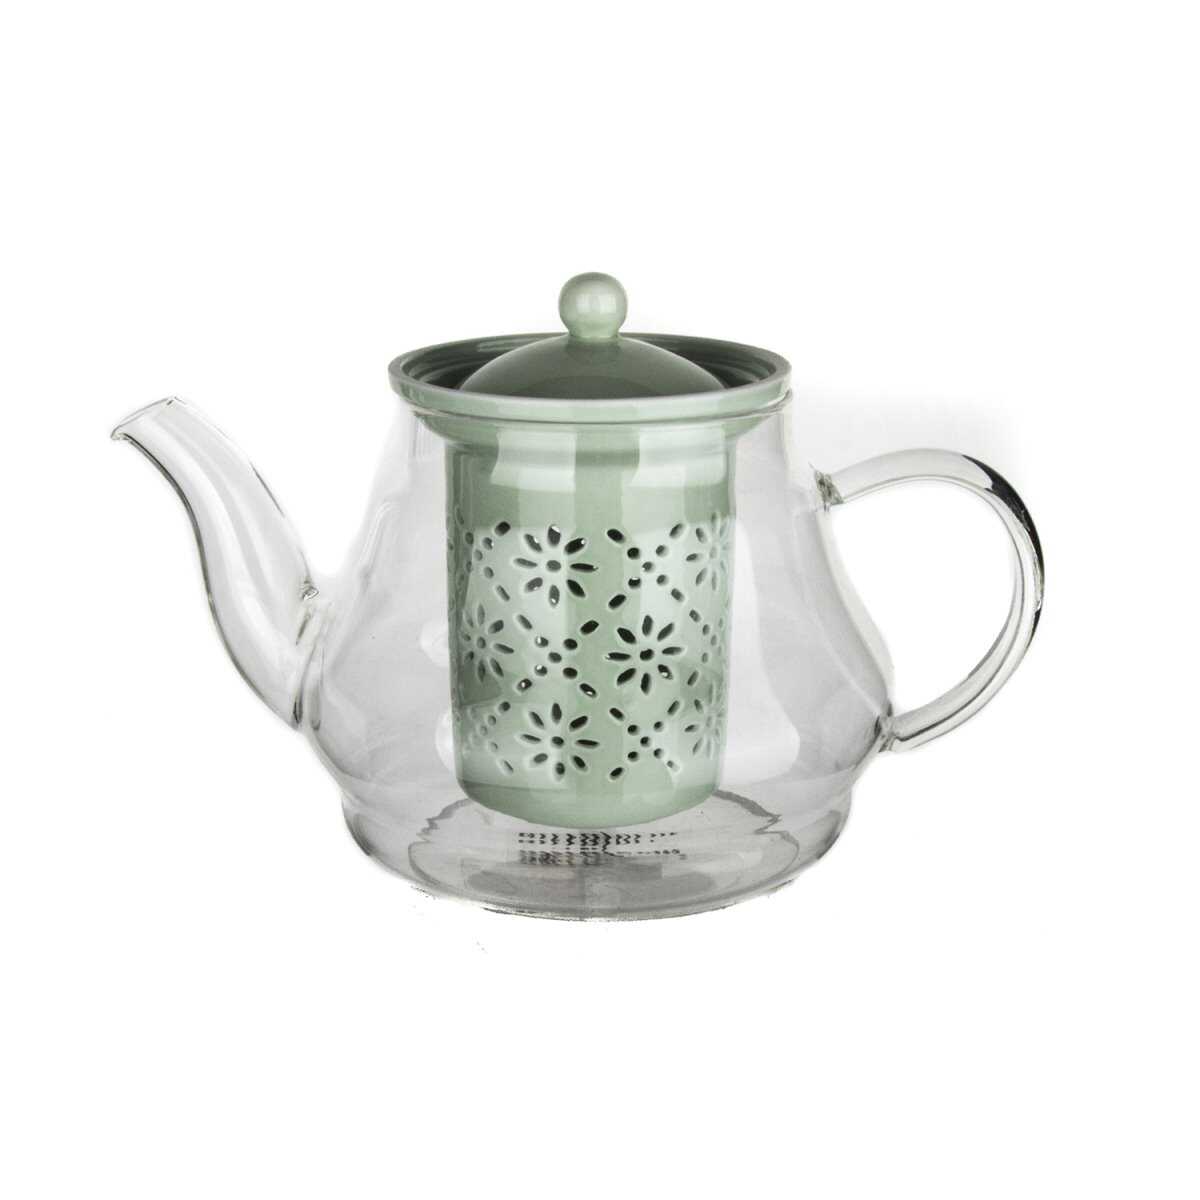 Ultraform Porcelain Teapot with Strainer